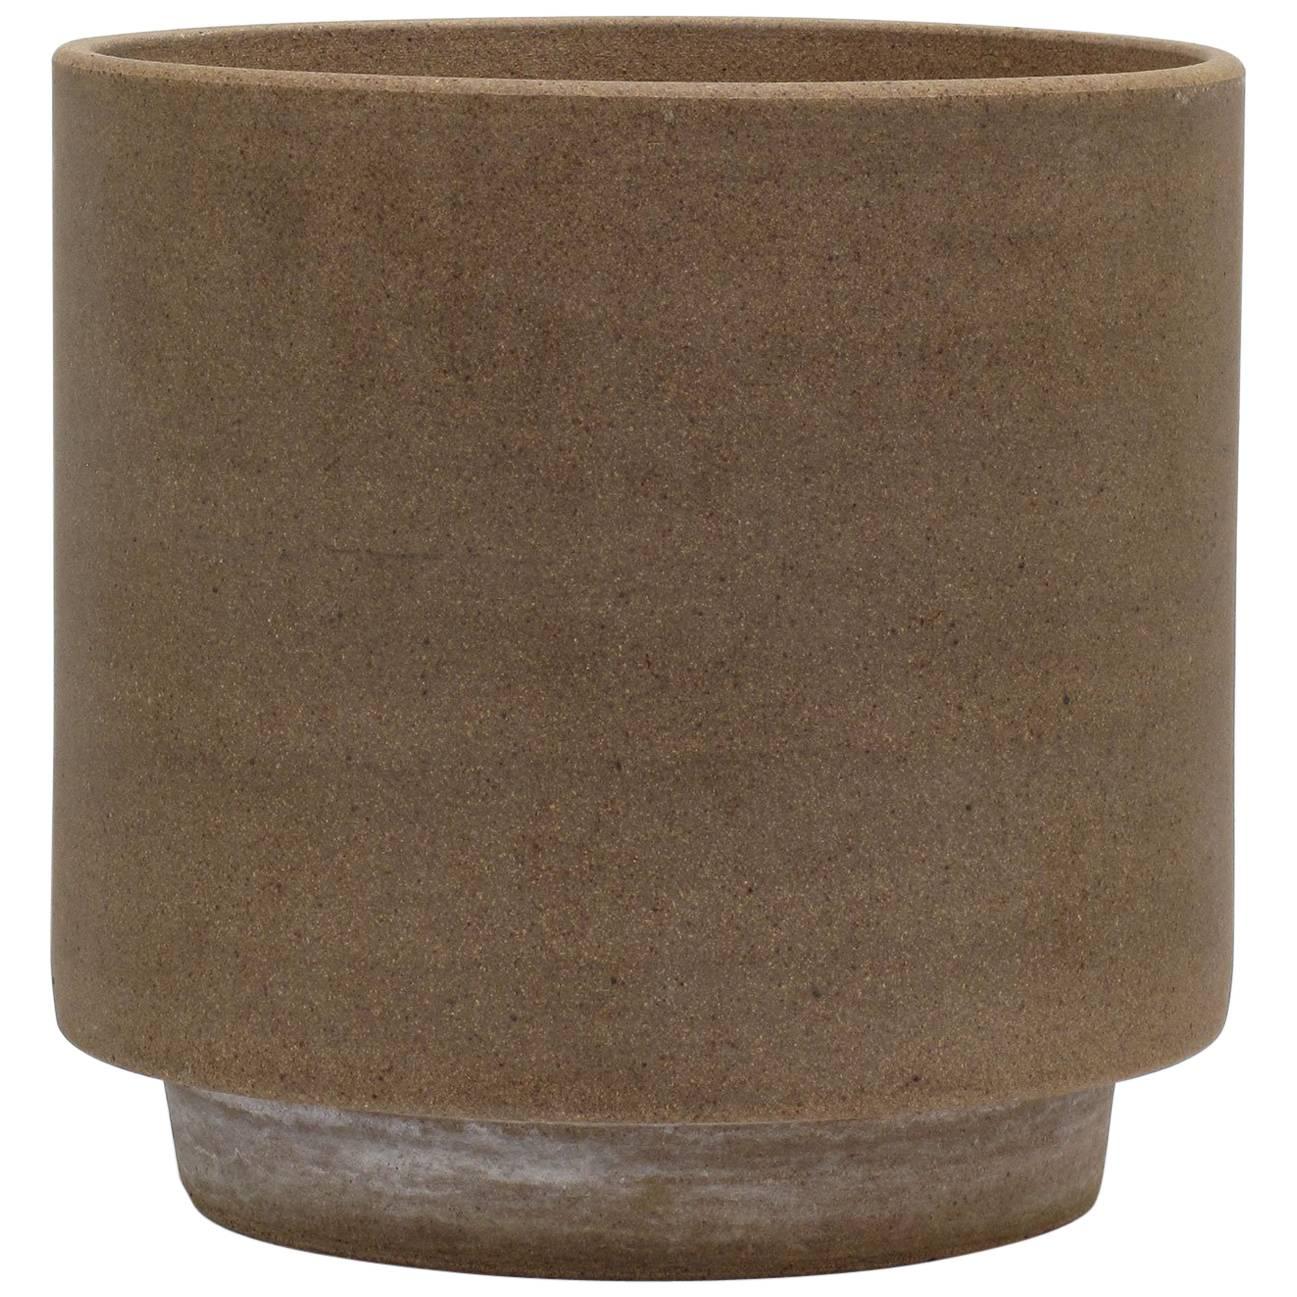 David Cressey Ceramic Planter, 1960s, California Modern Architectural Pottery For Sale